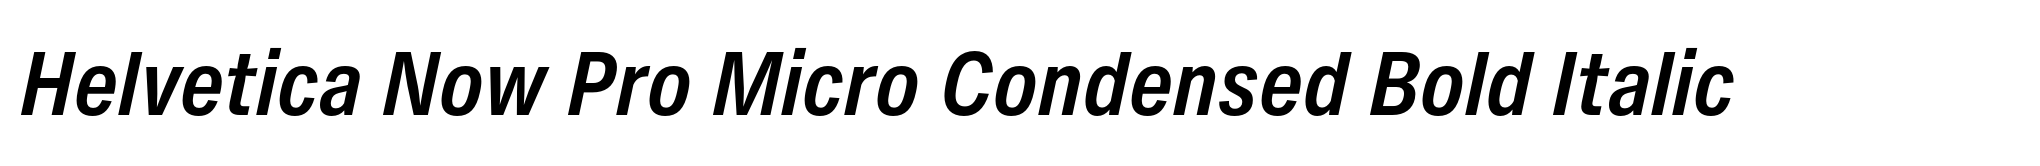 Helvetica Now Pro Micro Condensed Bold Italic image